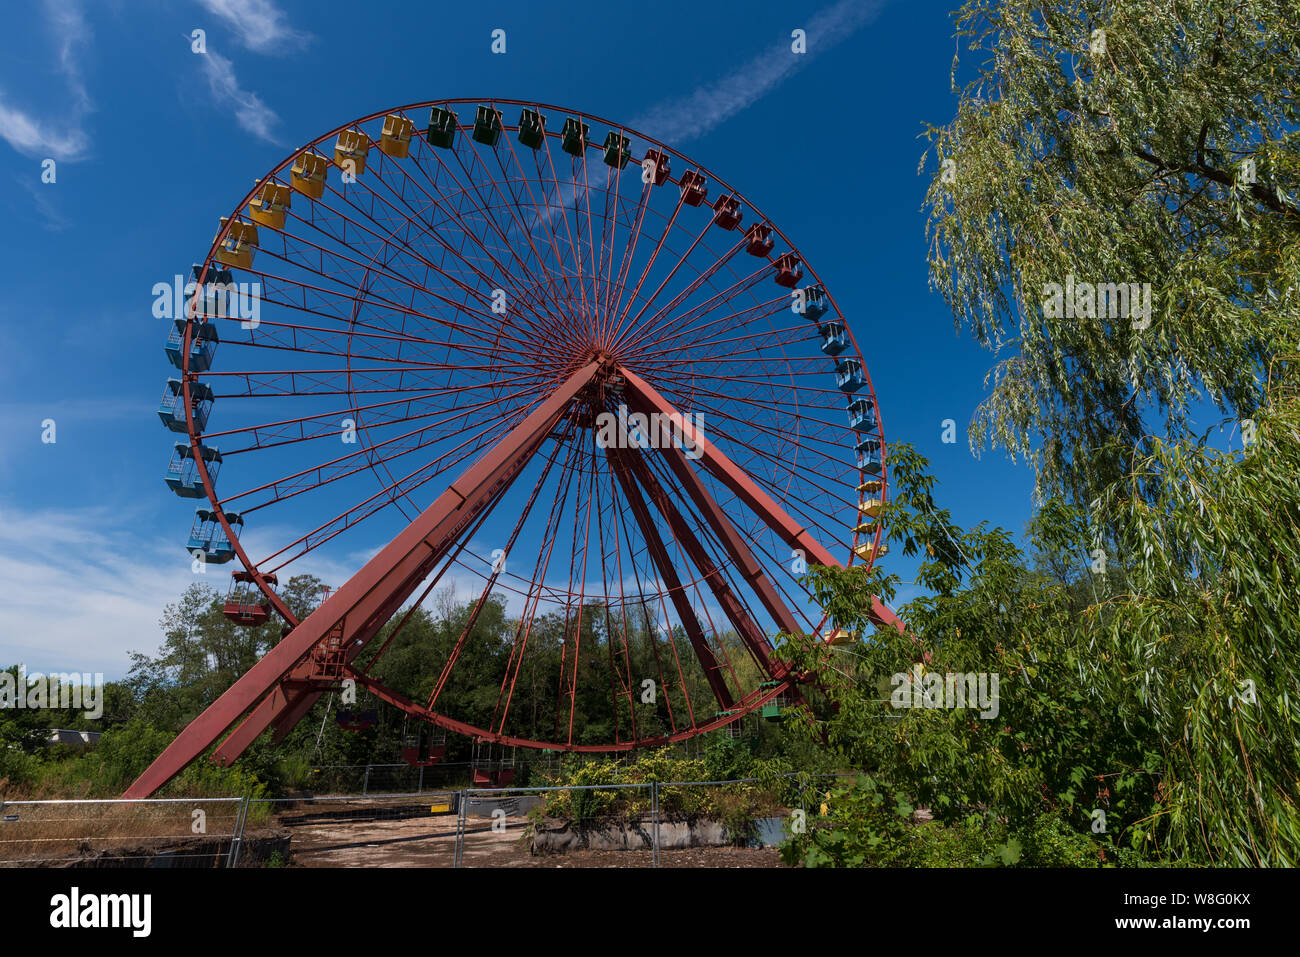 Abandoned ferris wheel in Spreepark, disused Berlin theme park from the GDR era Stock Photo